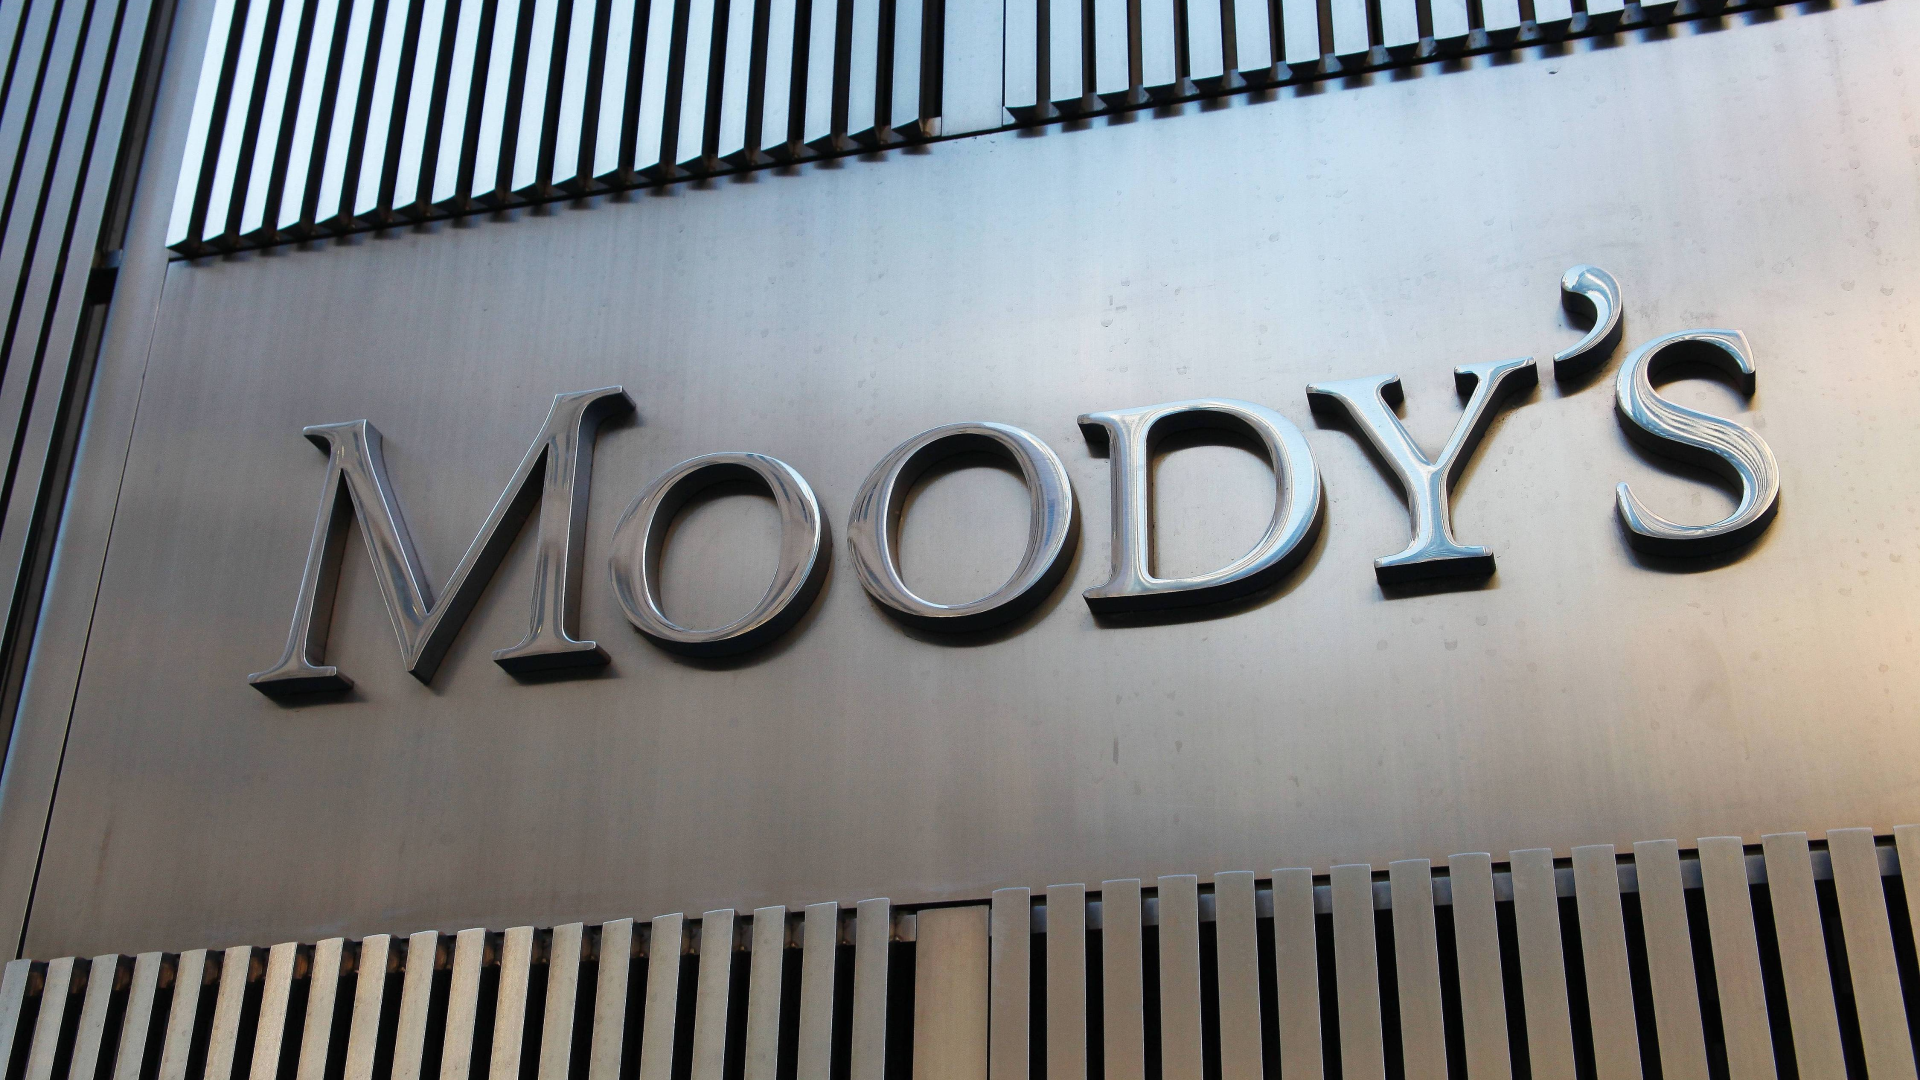 P s bank. Moody`s. Moody s логотип. Рейтинговое агентство Moody. Moody s Investors service логотип.